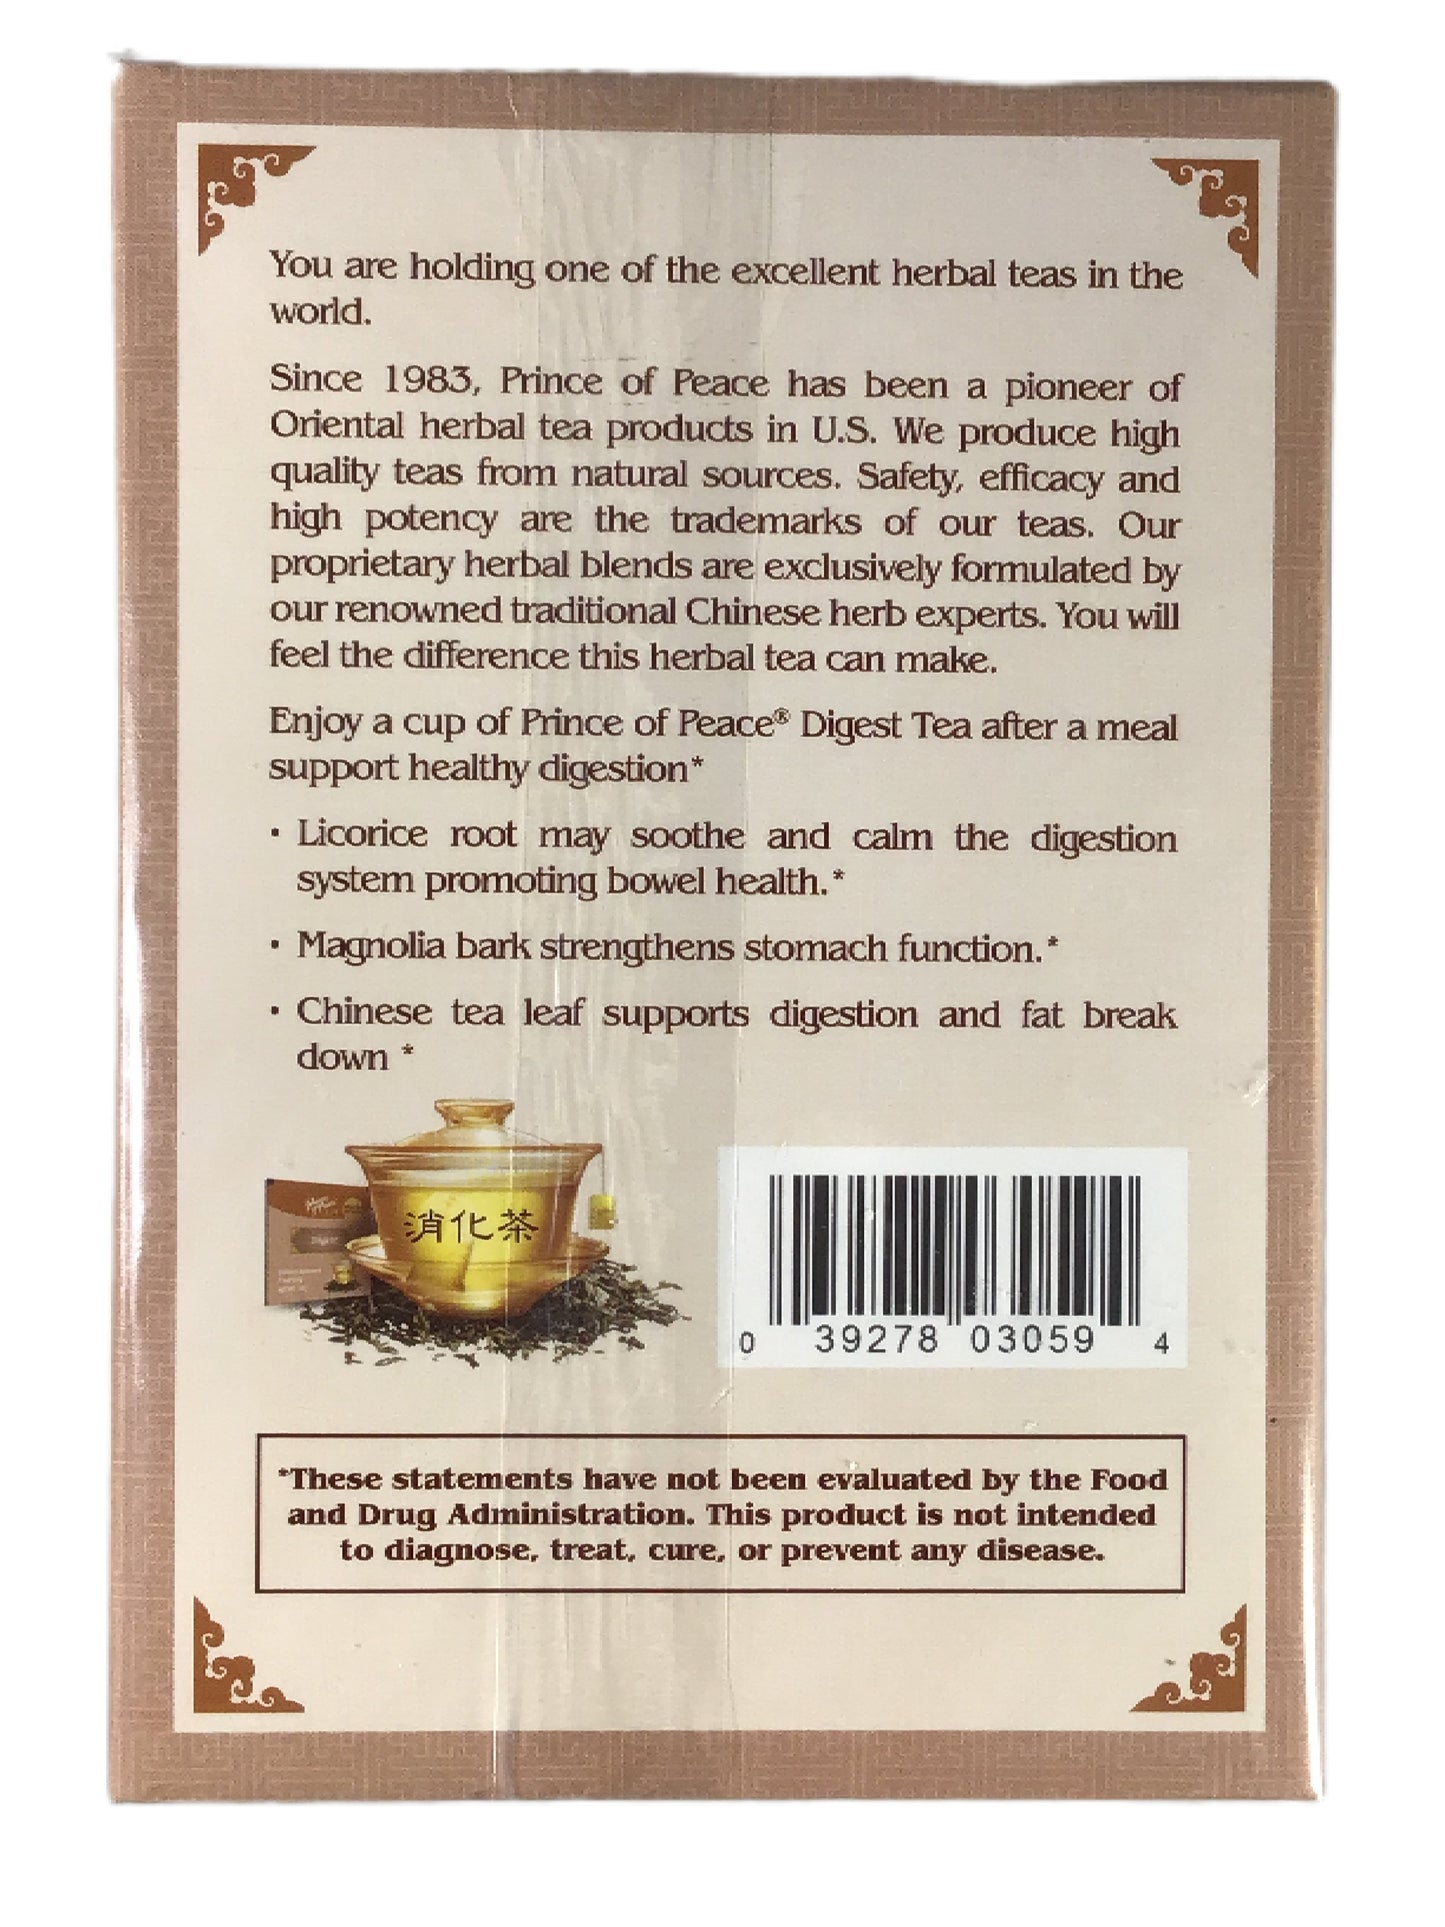 Prince of Peace 太子牌 Digest Herbal Tea 消化茶